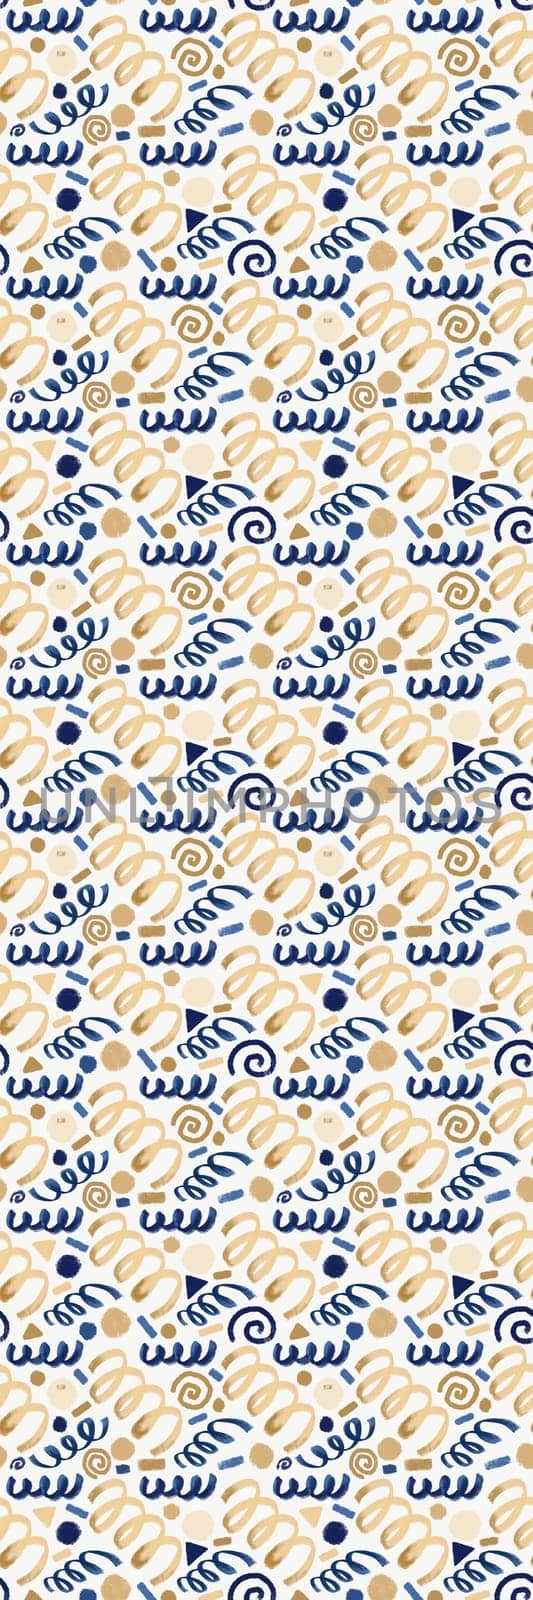 Golden Blue Festive doodles pattern bookmark - by Dustick